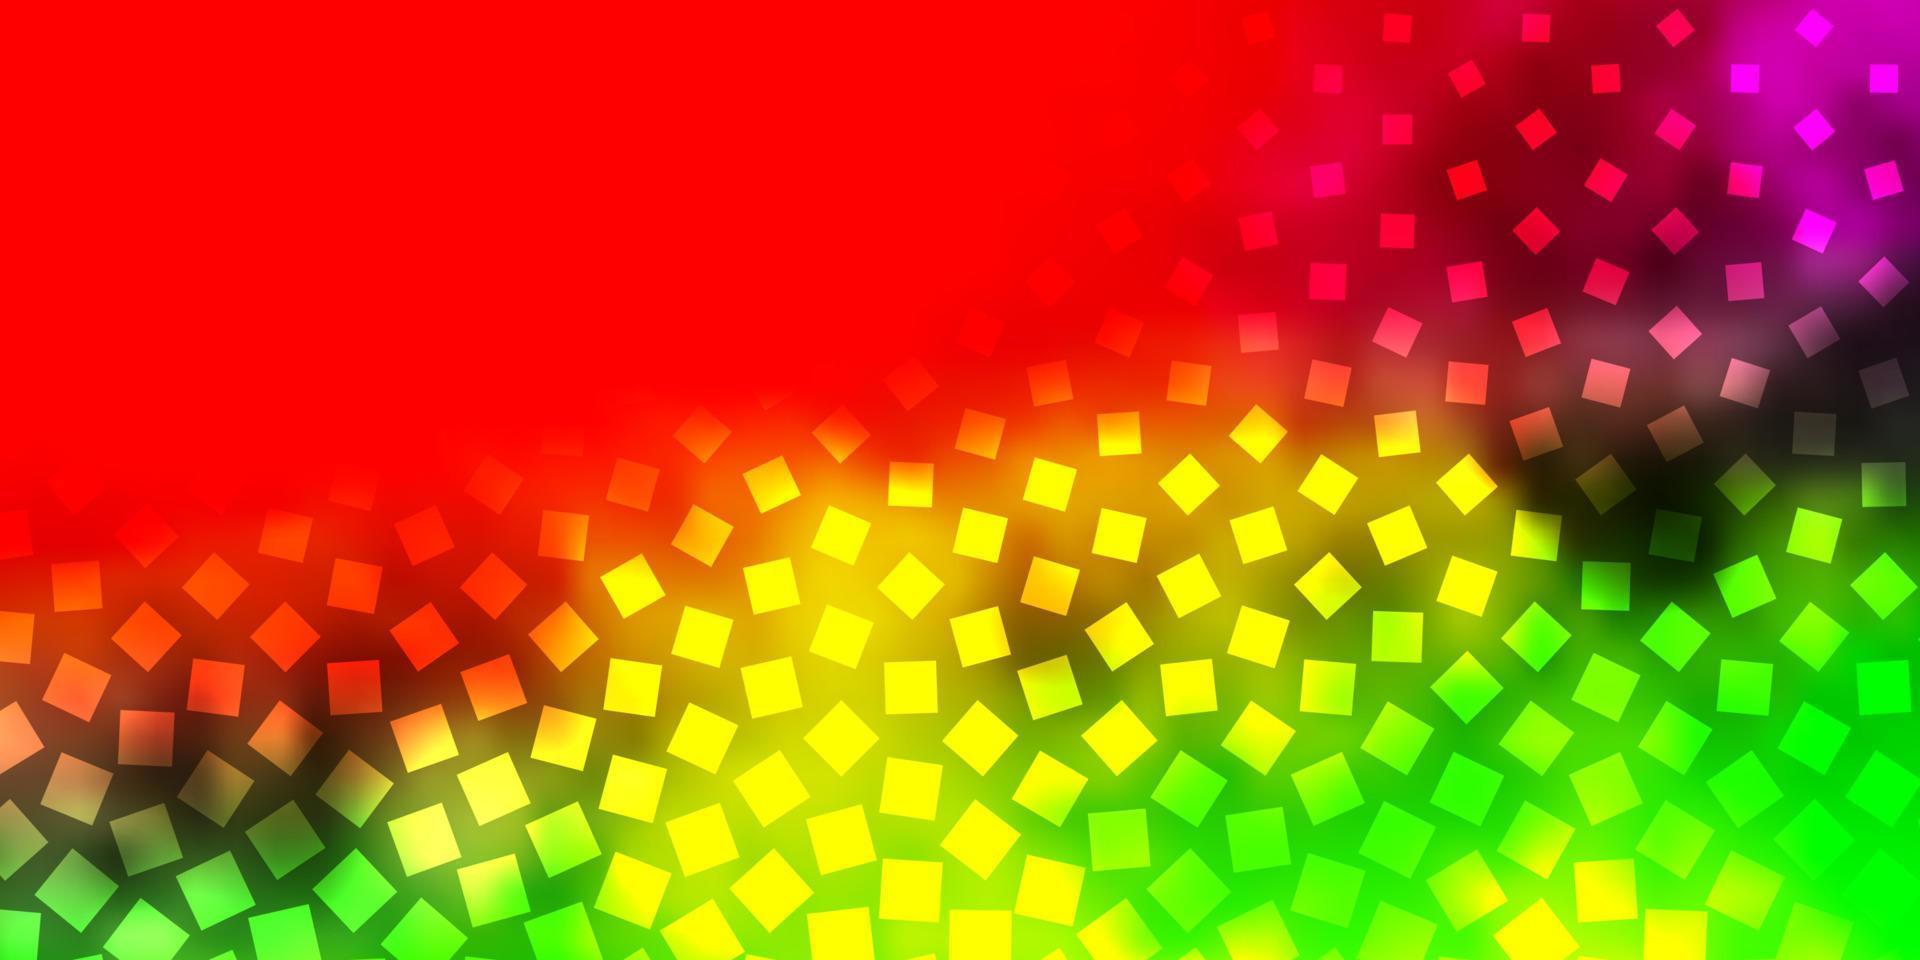 ljus flerfärgad bakgrund i polygonal stil. vektor